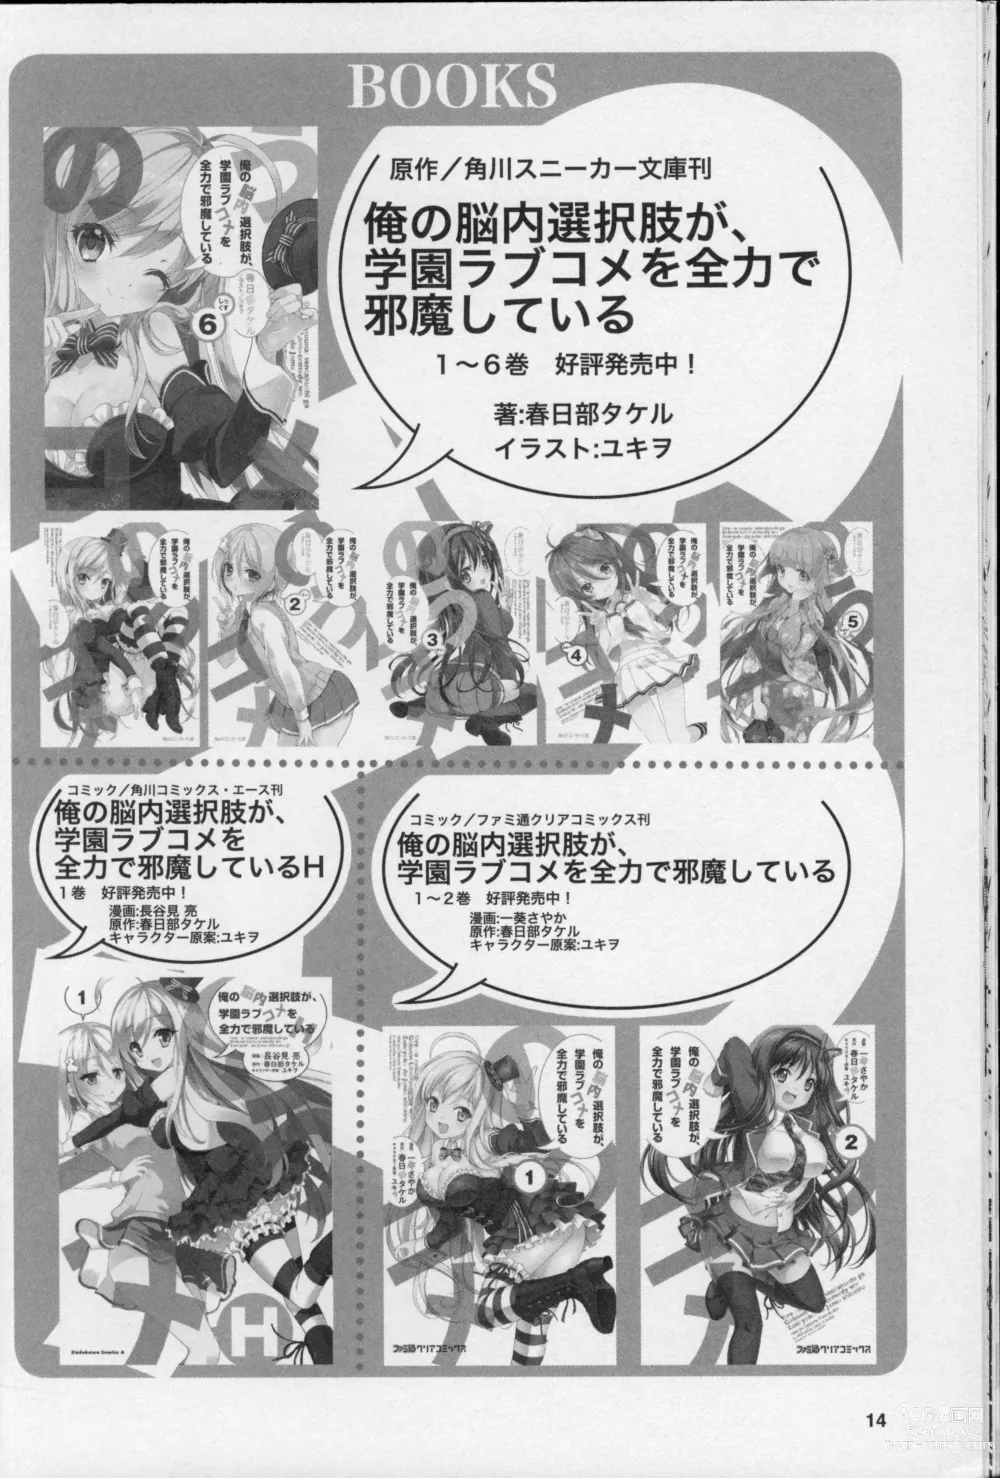 Page 17 of manga 「どっちを選ぶ?」ダブル描き下ろしコミックス Blu-ray＆DVD 第2巻 同梱特典